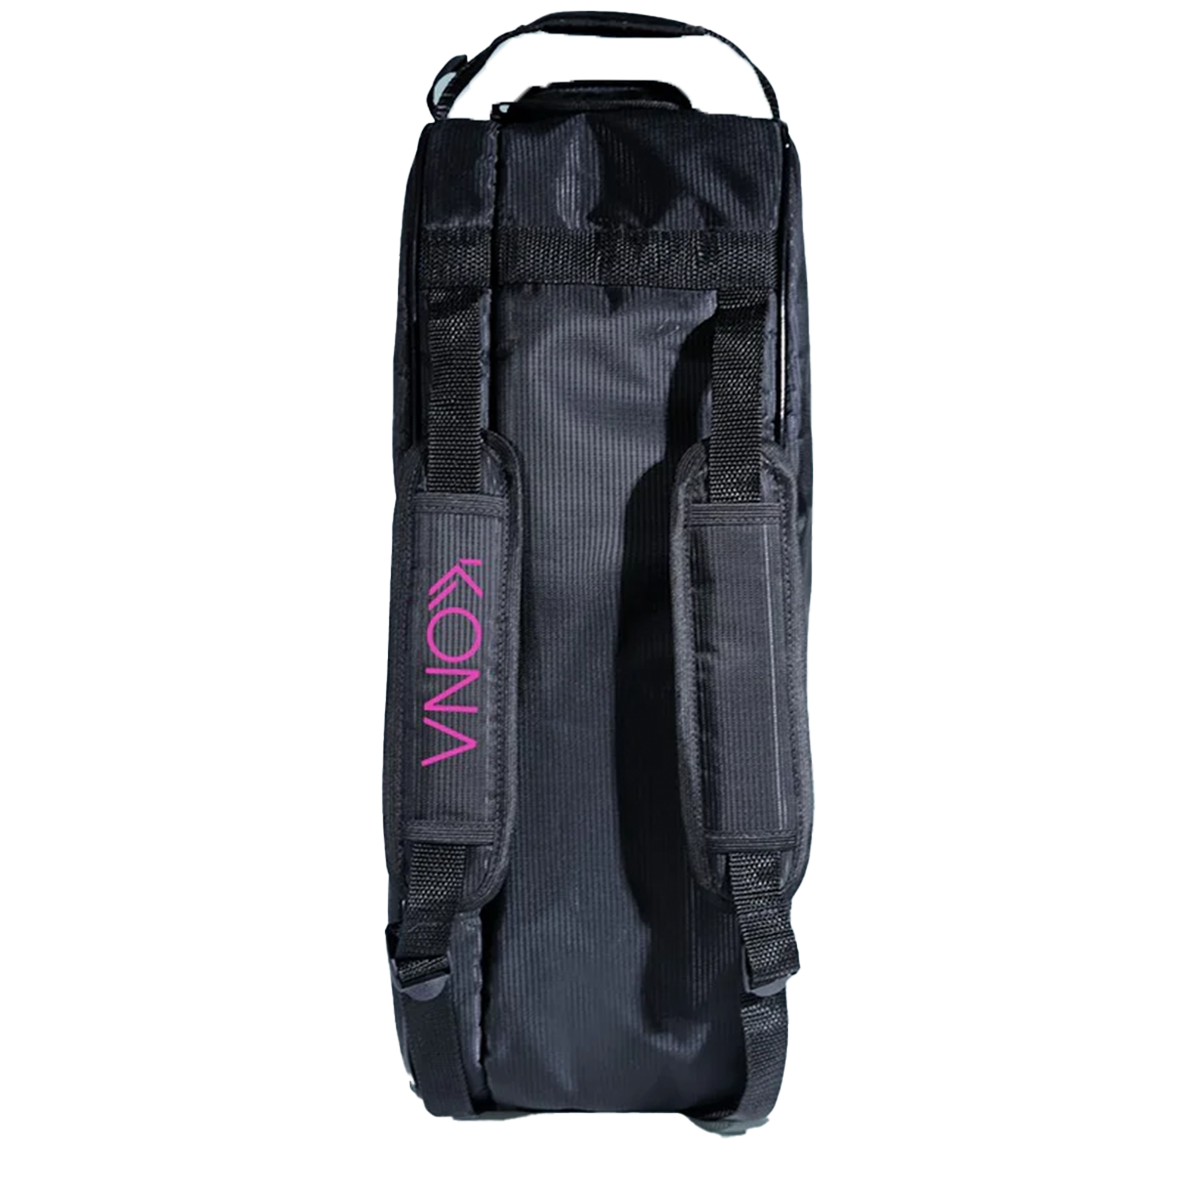 Kona BASIC PLUS Black / Pink Small Backpack